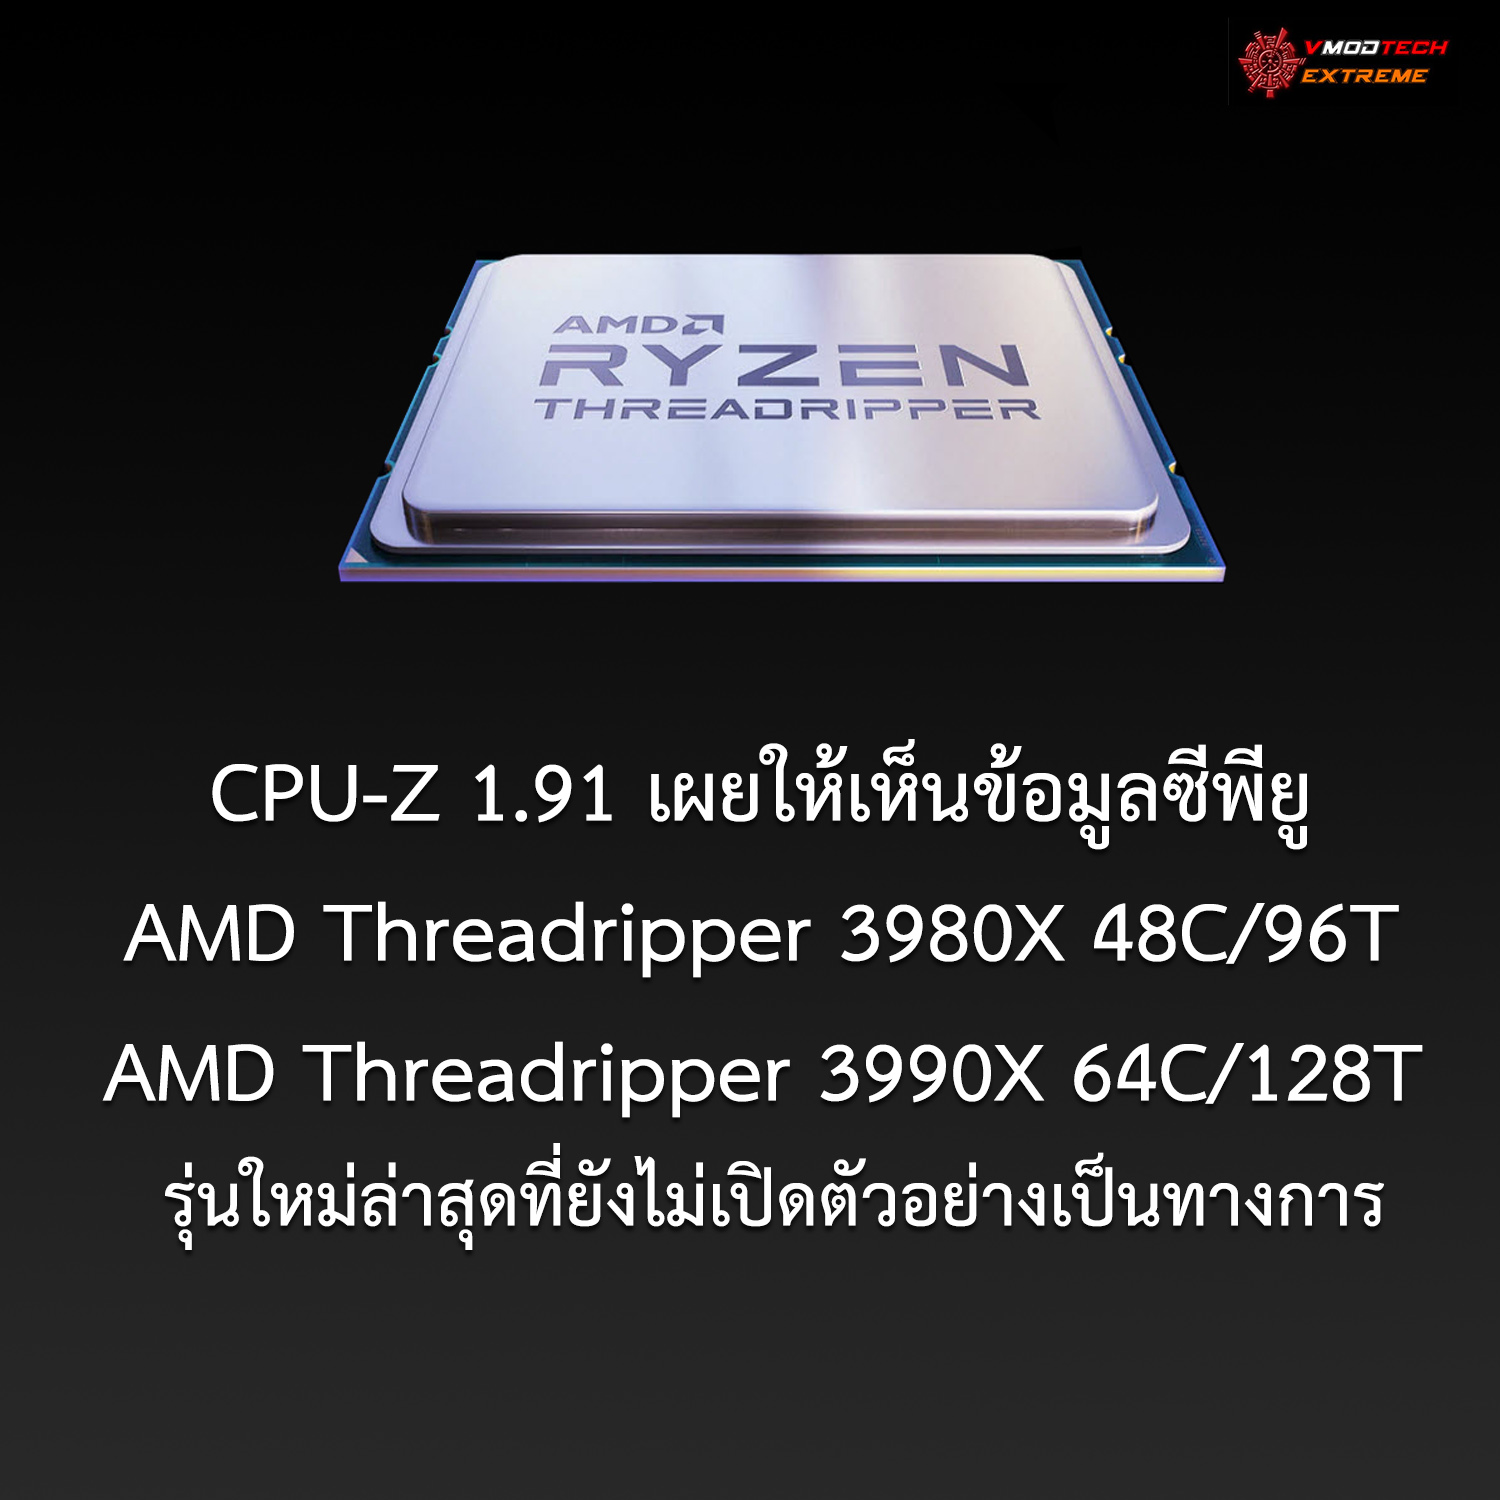 amd threadripper 3980x threadripper 3990x CPU Z 1.91 เผยให้เห็นข้อมูลซีพียู AMD Threadripper 3980X 48C/96T และ Threadripper 3990X 64C/128T รุ่นใหม่ล่าสุดที่ยังไม่เปิดตัวอย่างเป็นทางการ